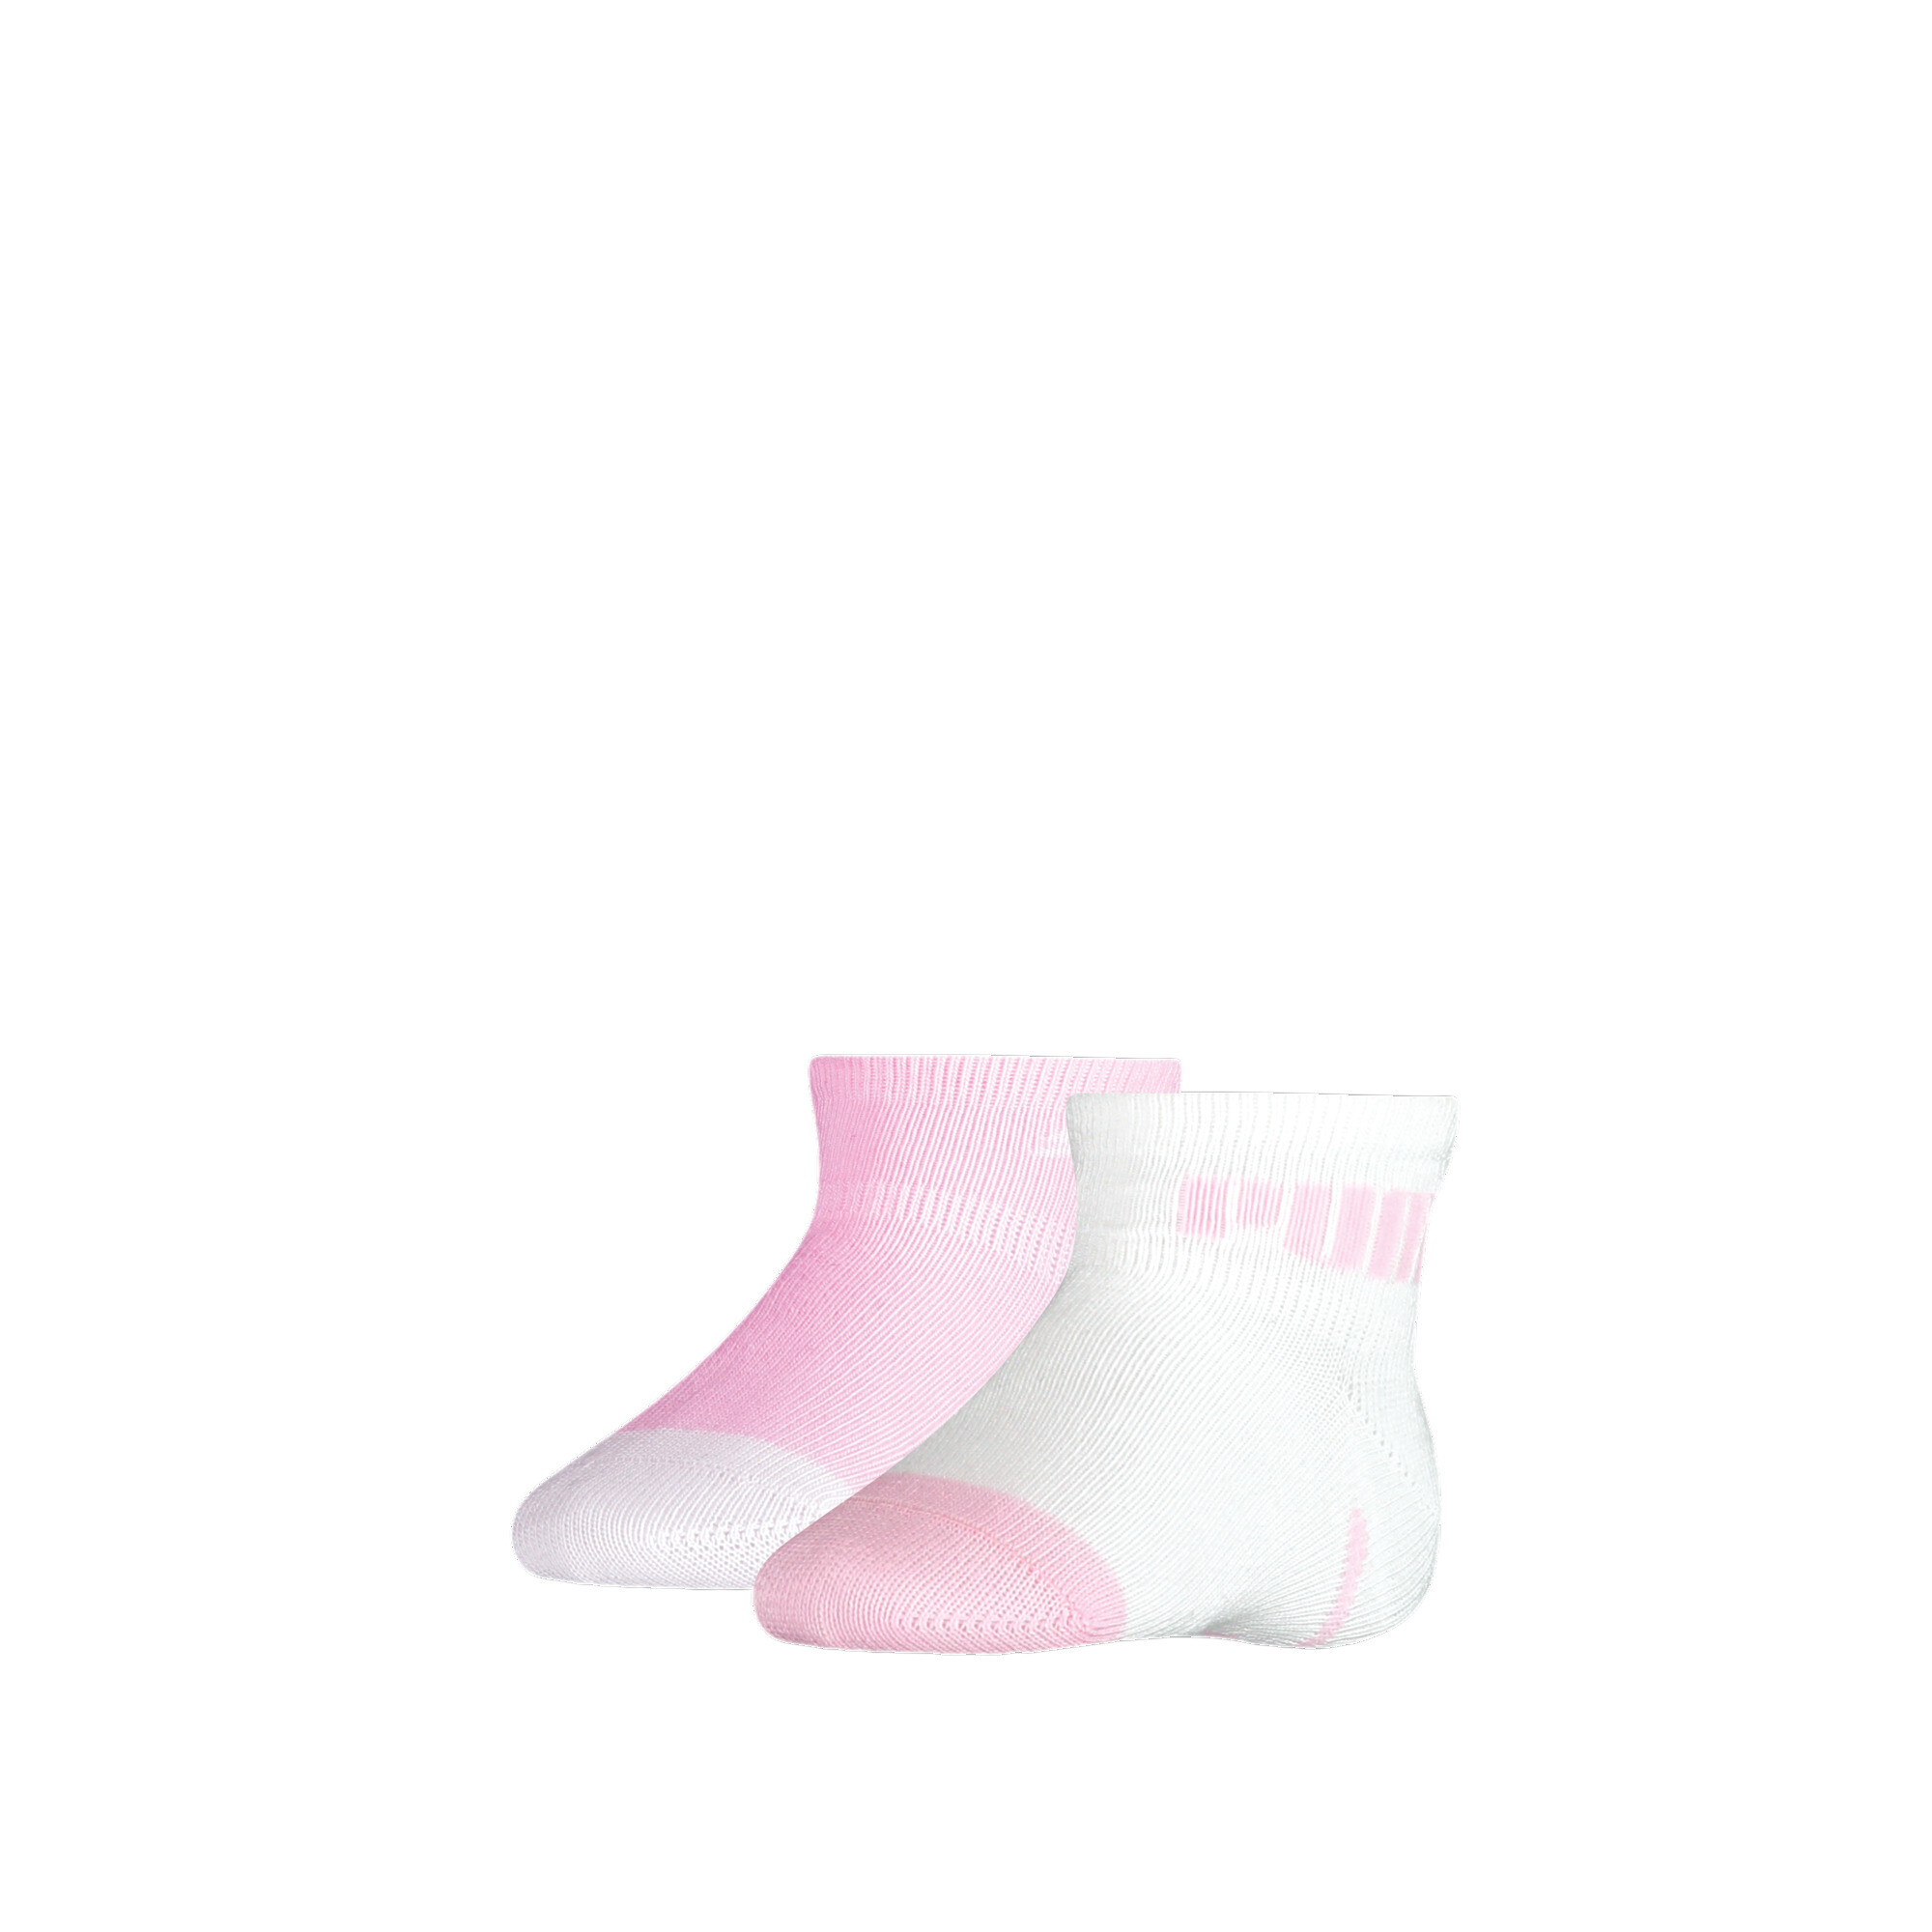 Puma Baby Mini Cats Lifestyle Socks 2 Pack, Pink, Size 15-18, Clothing